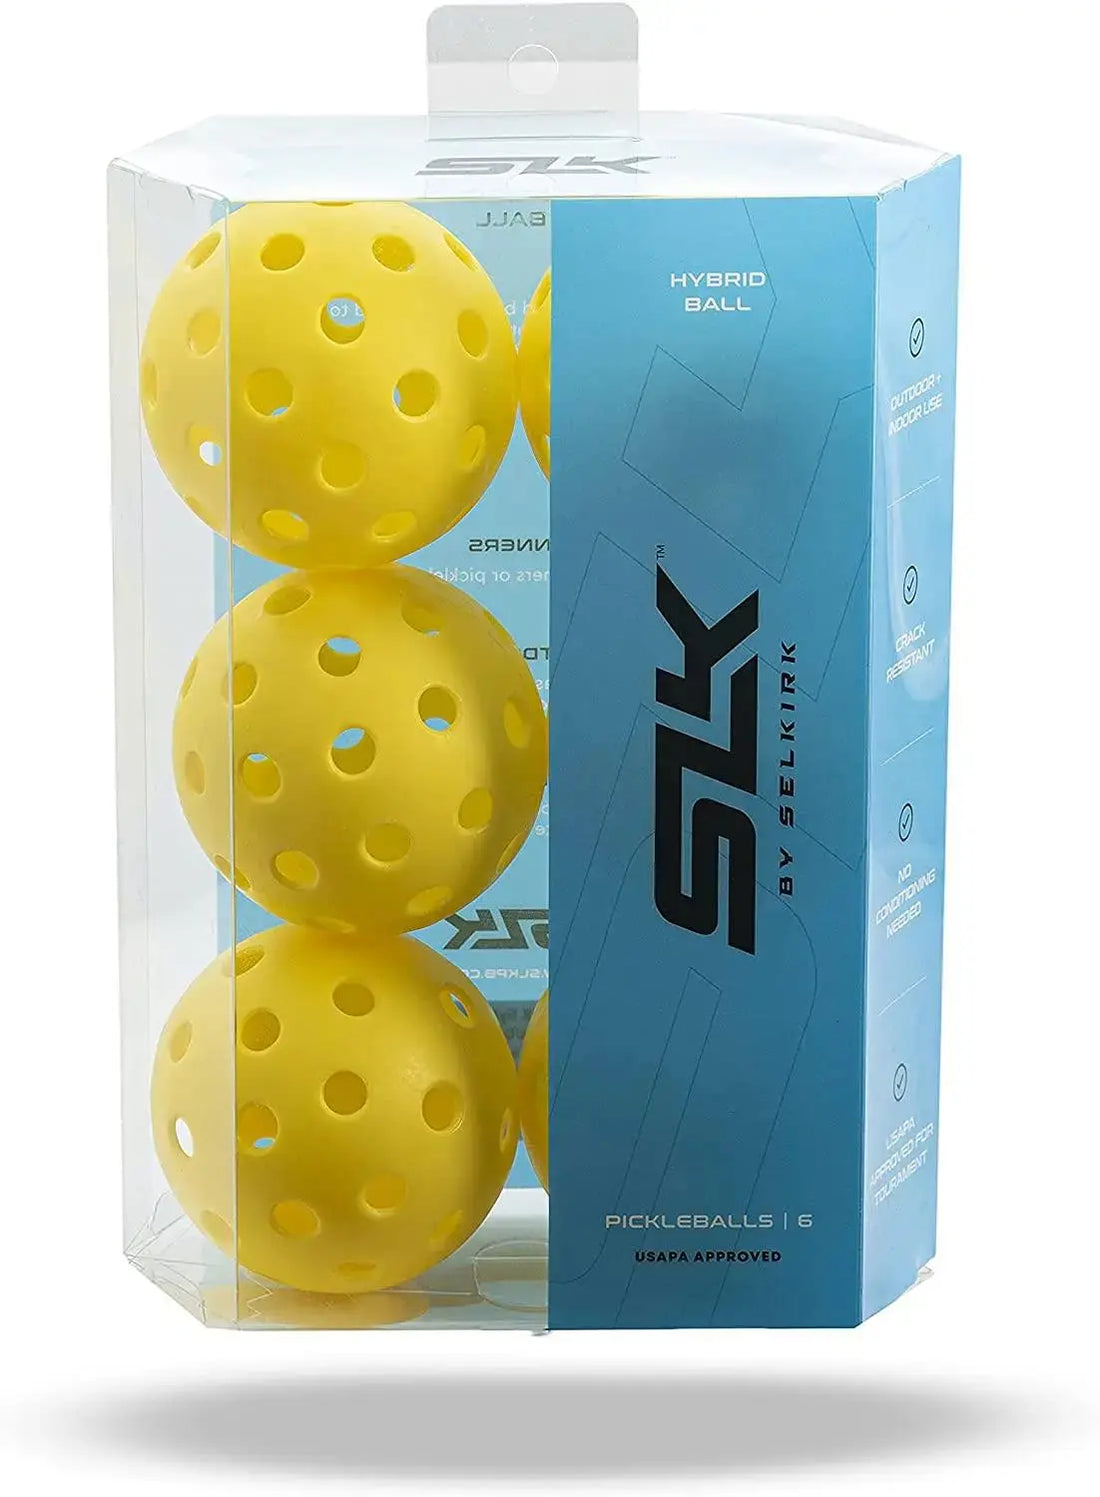 Selkirk Pickleballs SLK Hybrid Indoor and Outdoor - 6 balls Racquet Point